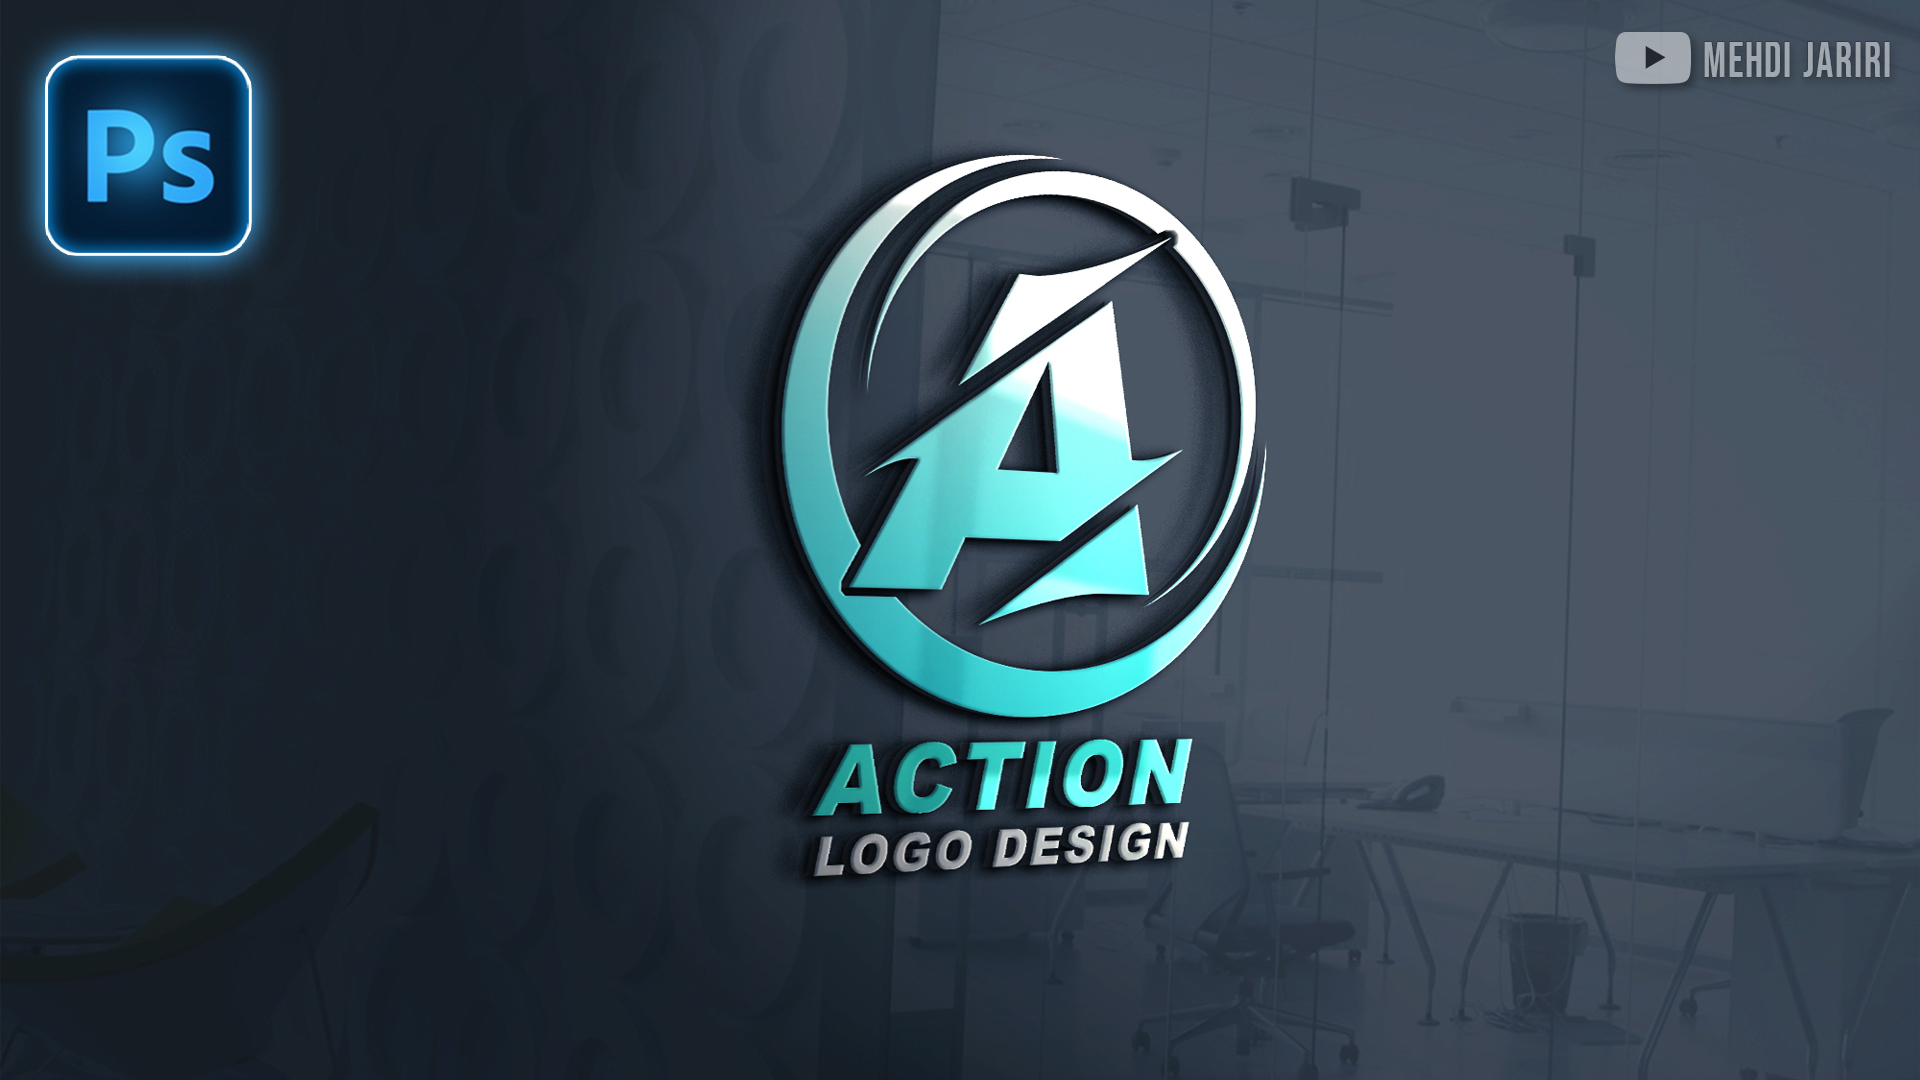 تصميم لوجو احترافي بالفوتوشوب | Action Logo Design in Photoshop